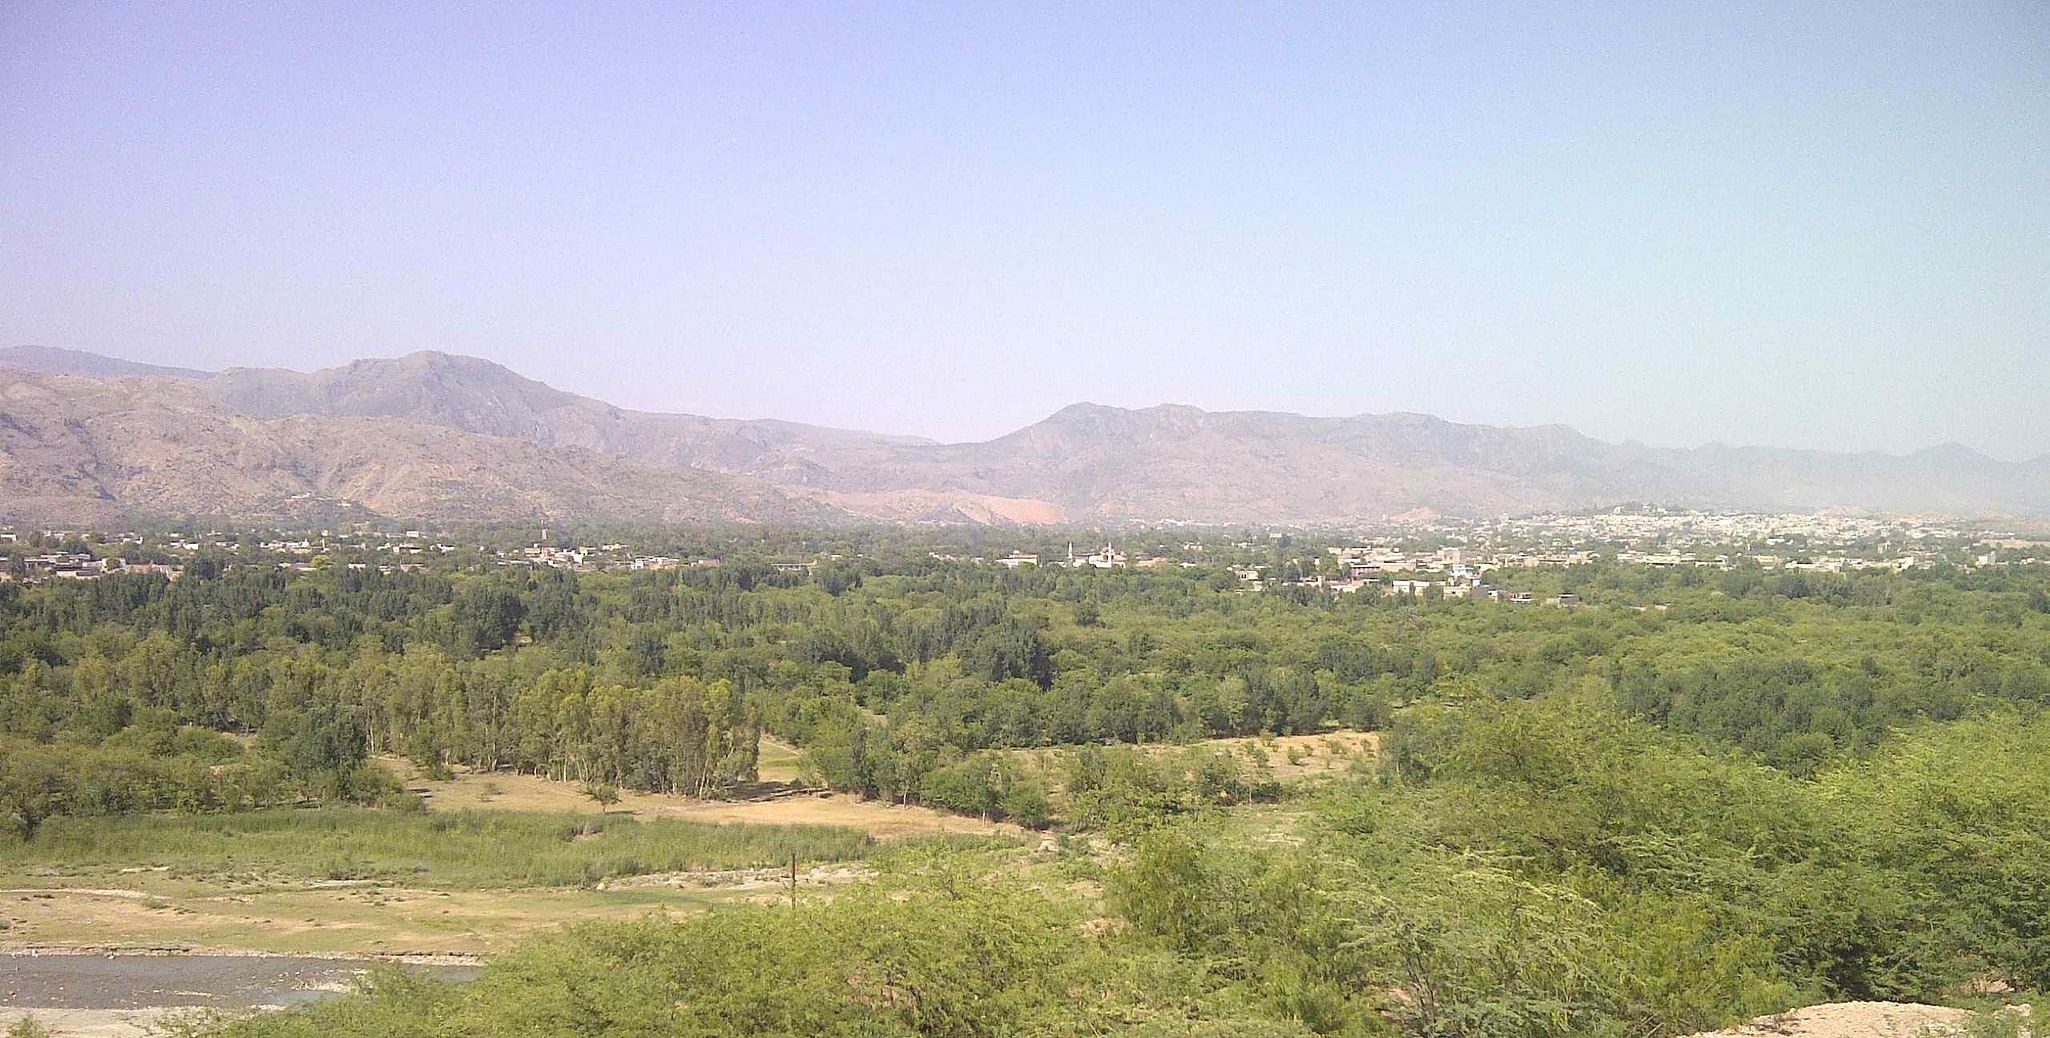 Kohat, Pakistan